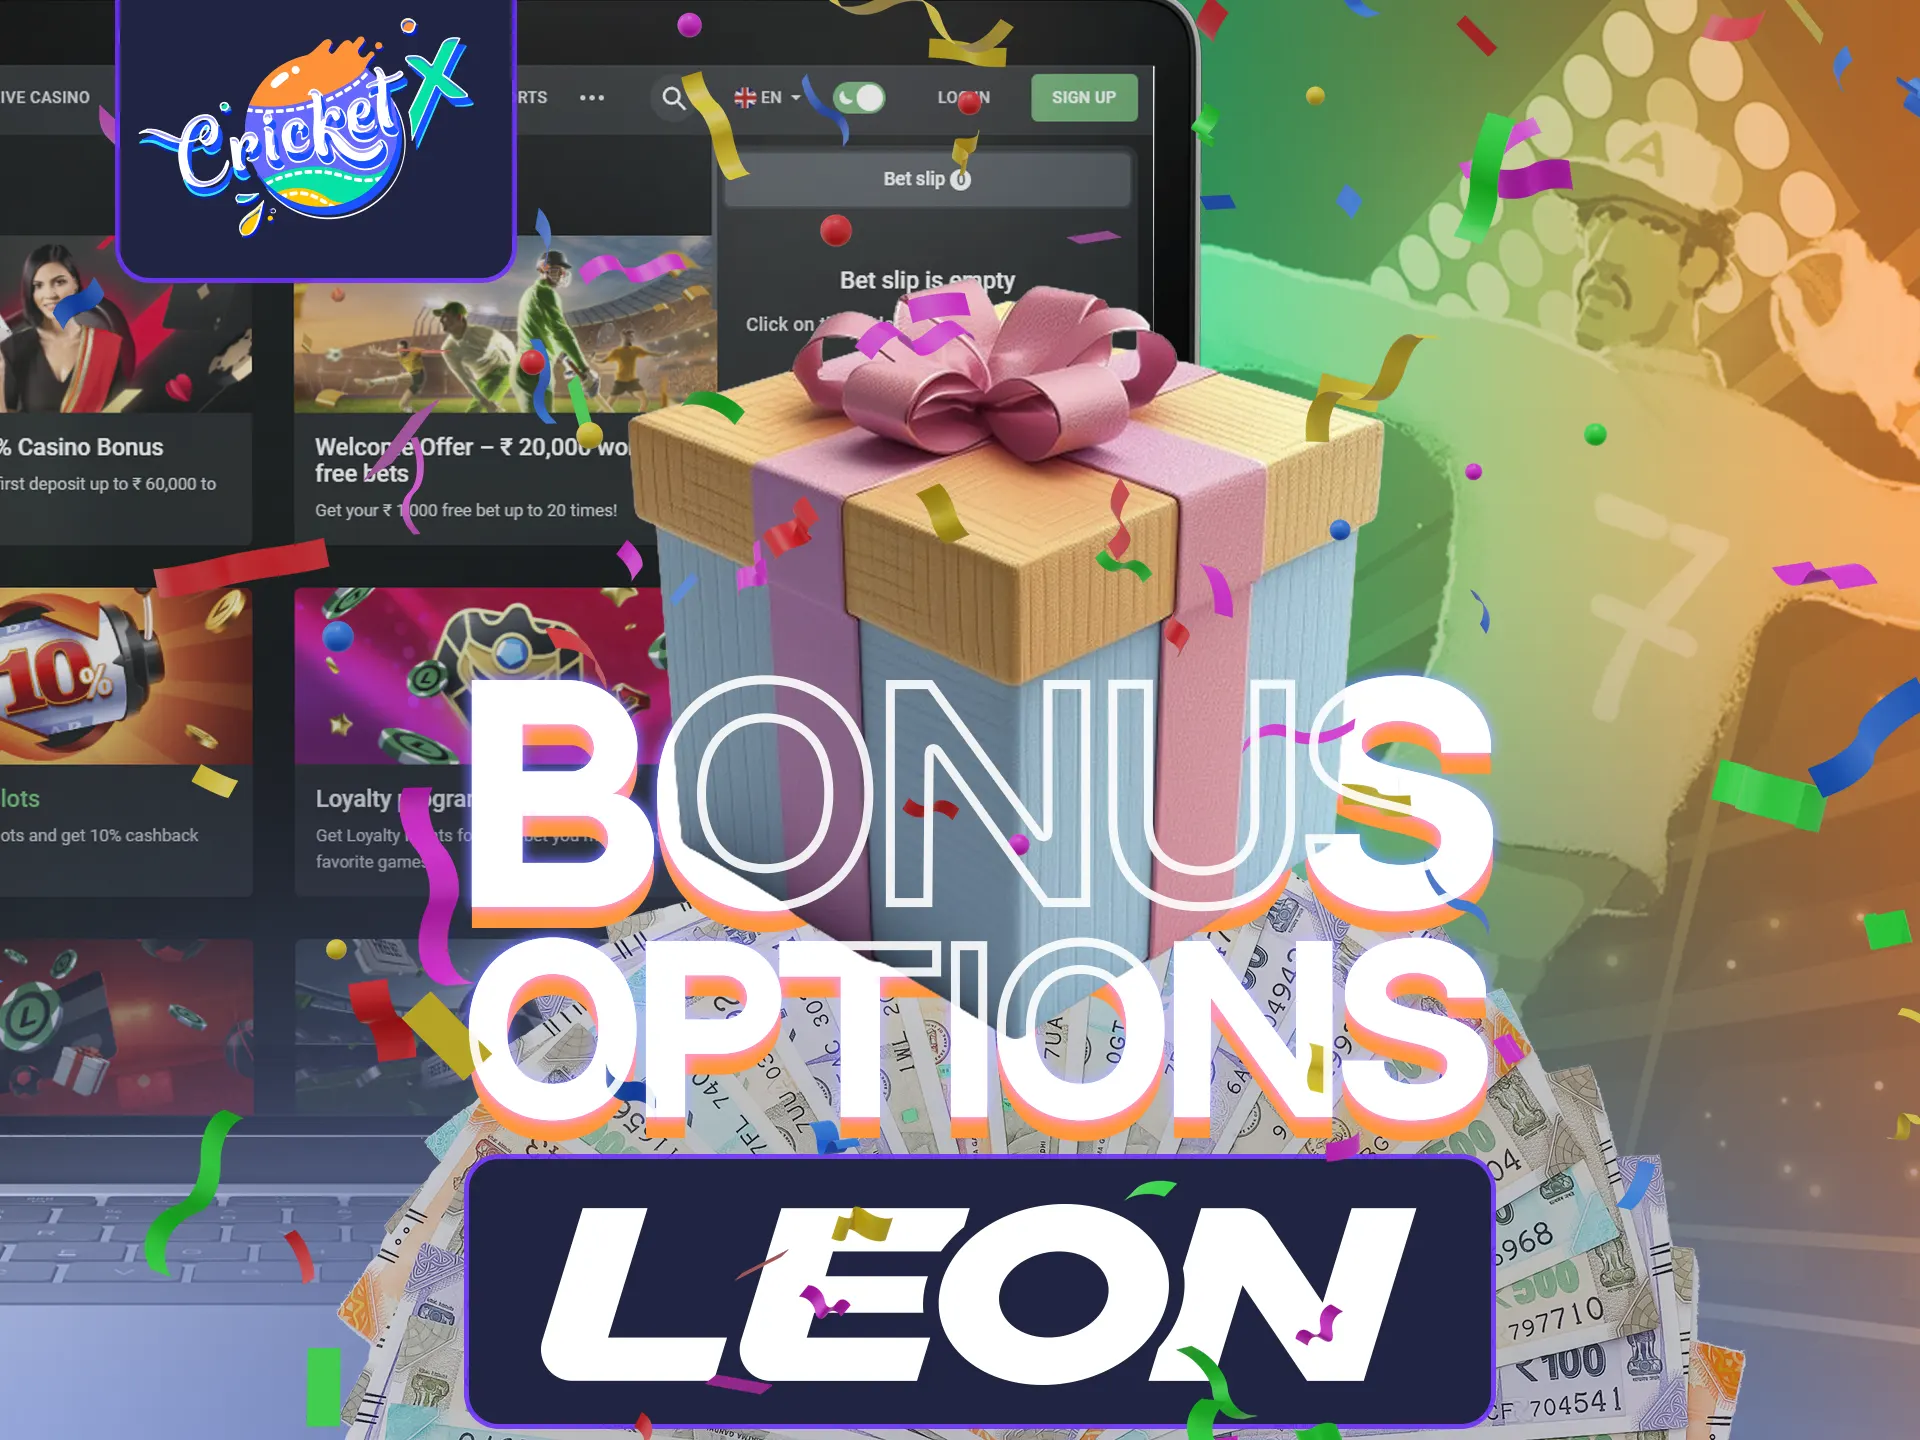 LeonBet offers bonuses to boost Cricket X winnings.